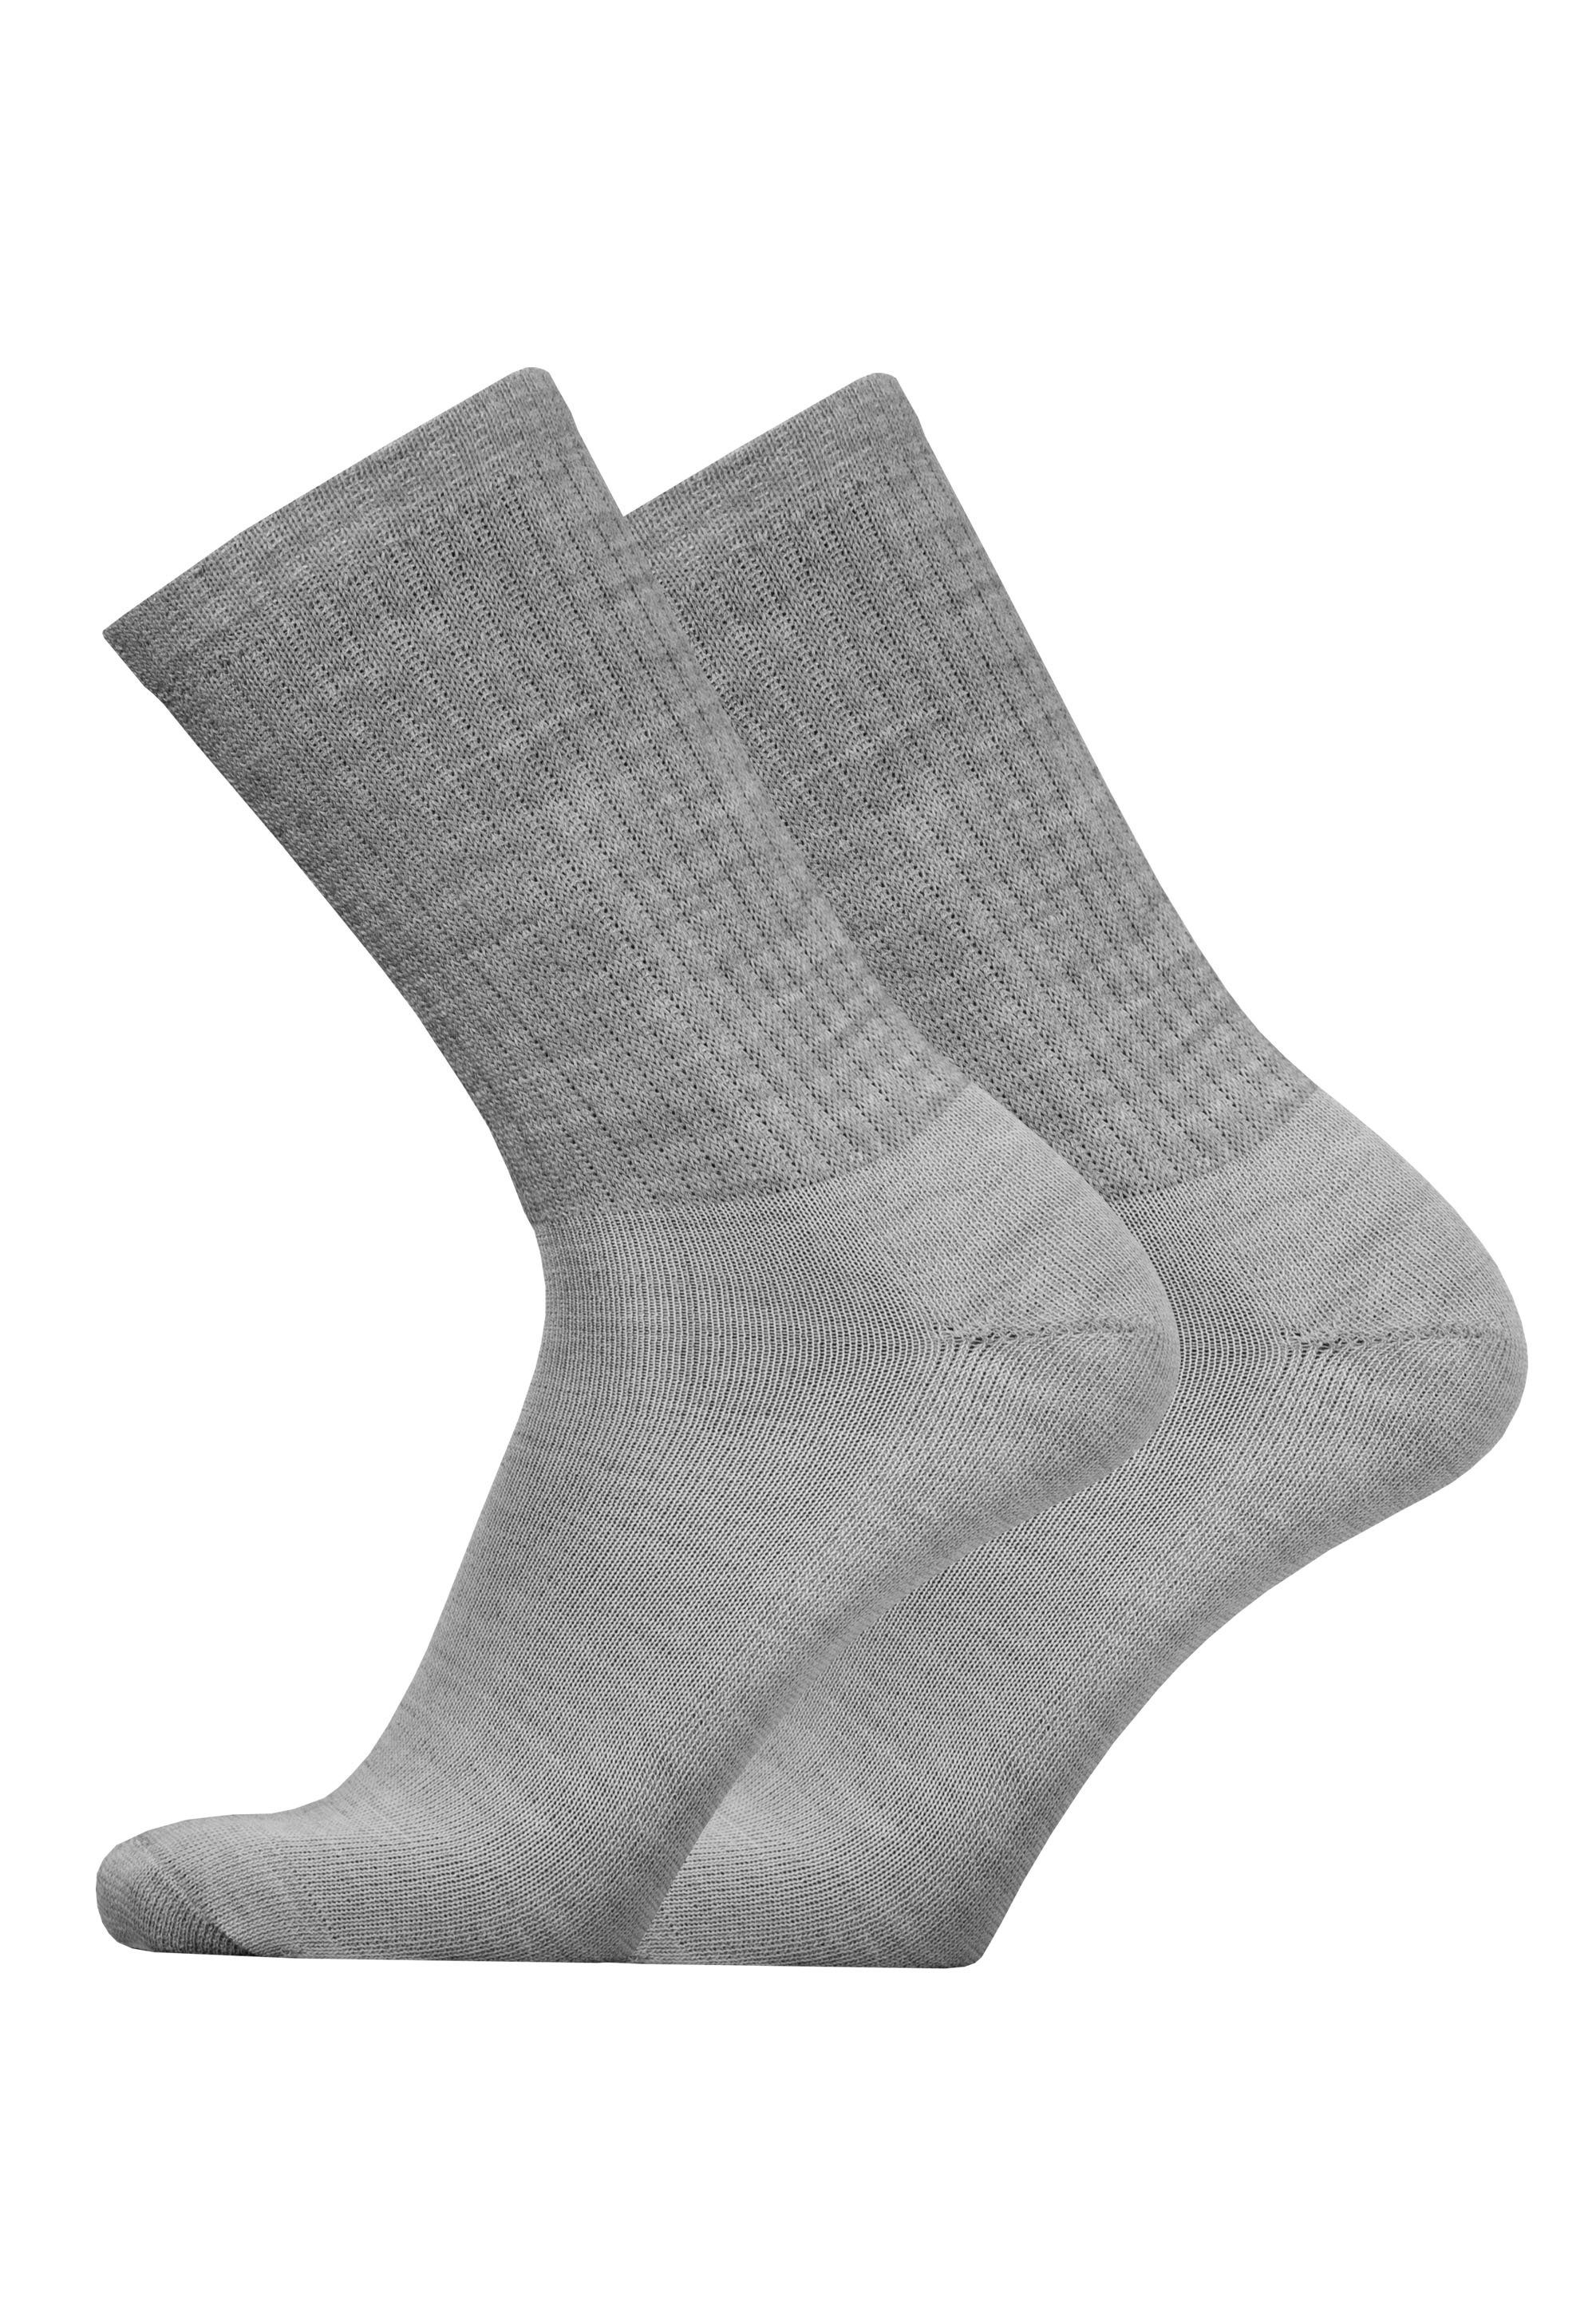 (2-Paar) Socken SPORT UphillSport Pack Qualität hellgrau MERINO atmungsaktiver 2er in